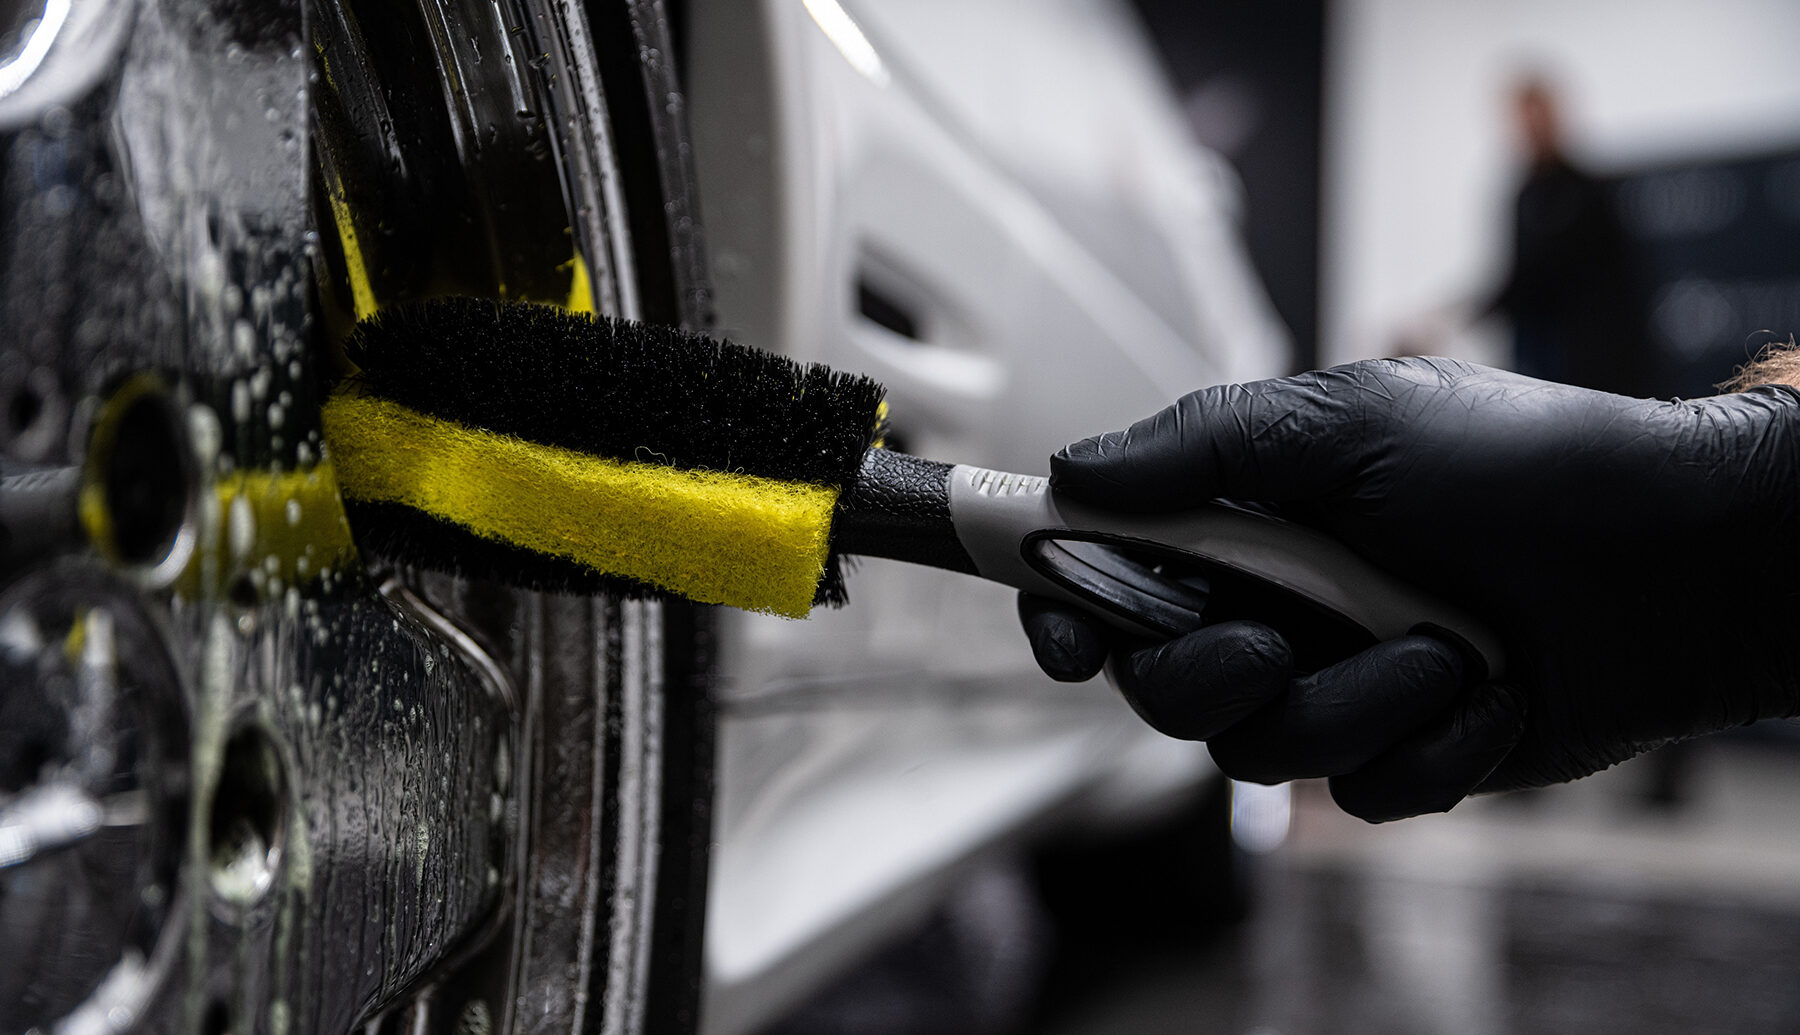 car wash or car detailing studio employee washes a shiny chrome rim